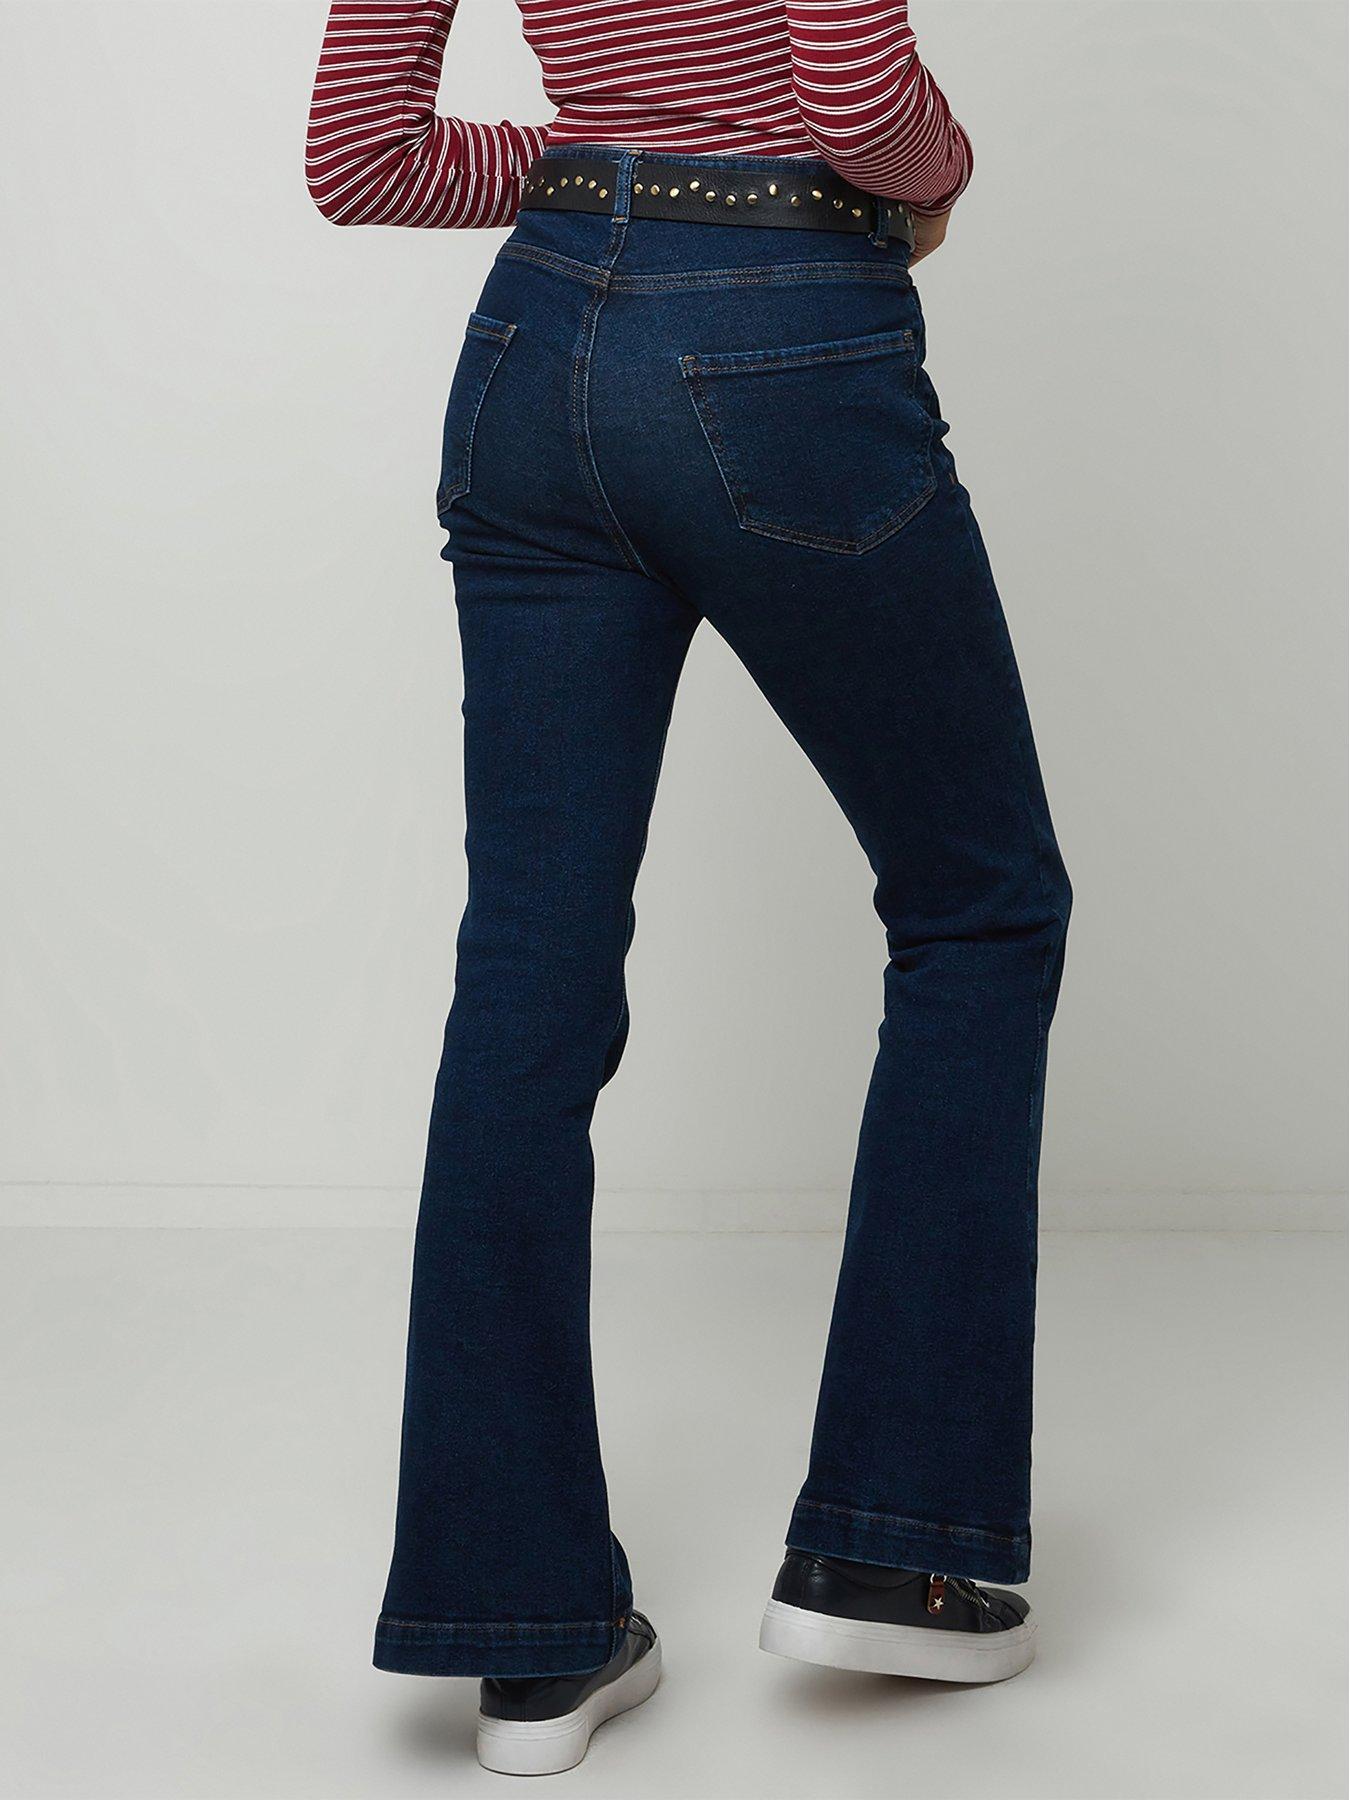 Mens-Denim Indigo-Bell-Bottoms-Flared-Jeans-60's 70's style retro vintage  new